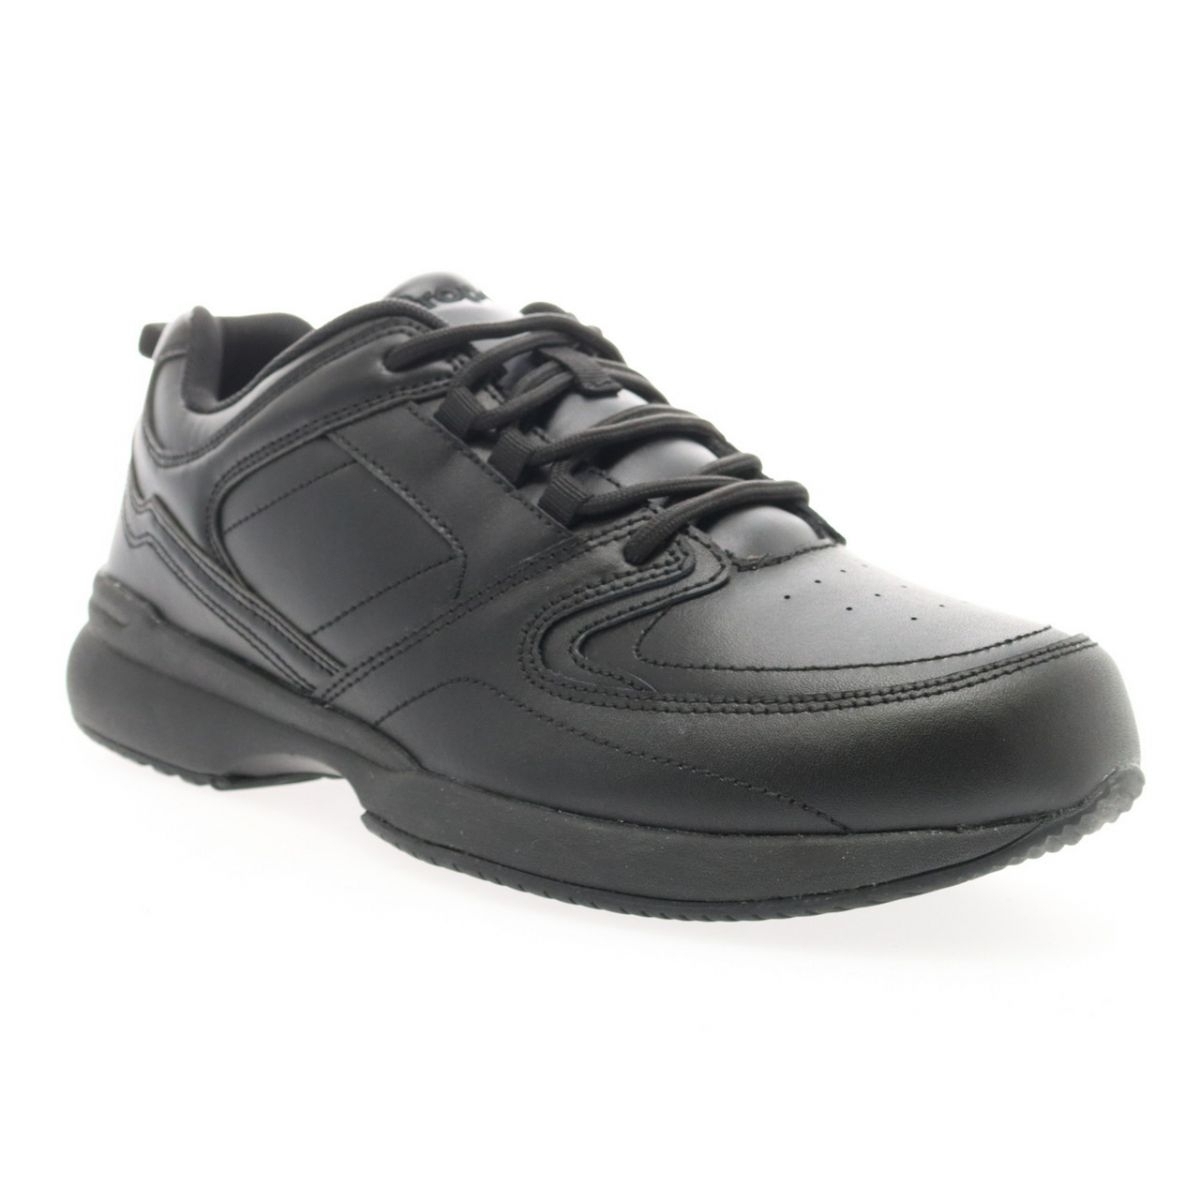 Propet Men's Life Walker Sport Sneaker Black - MAA272LBLK BLACK - BLACK, 10.5